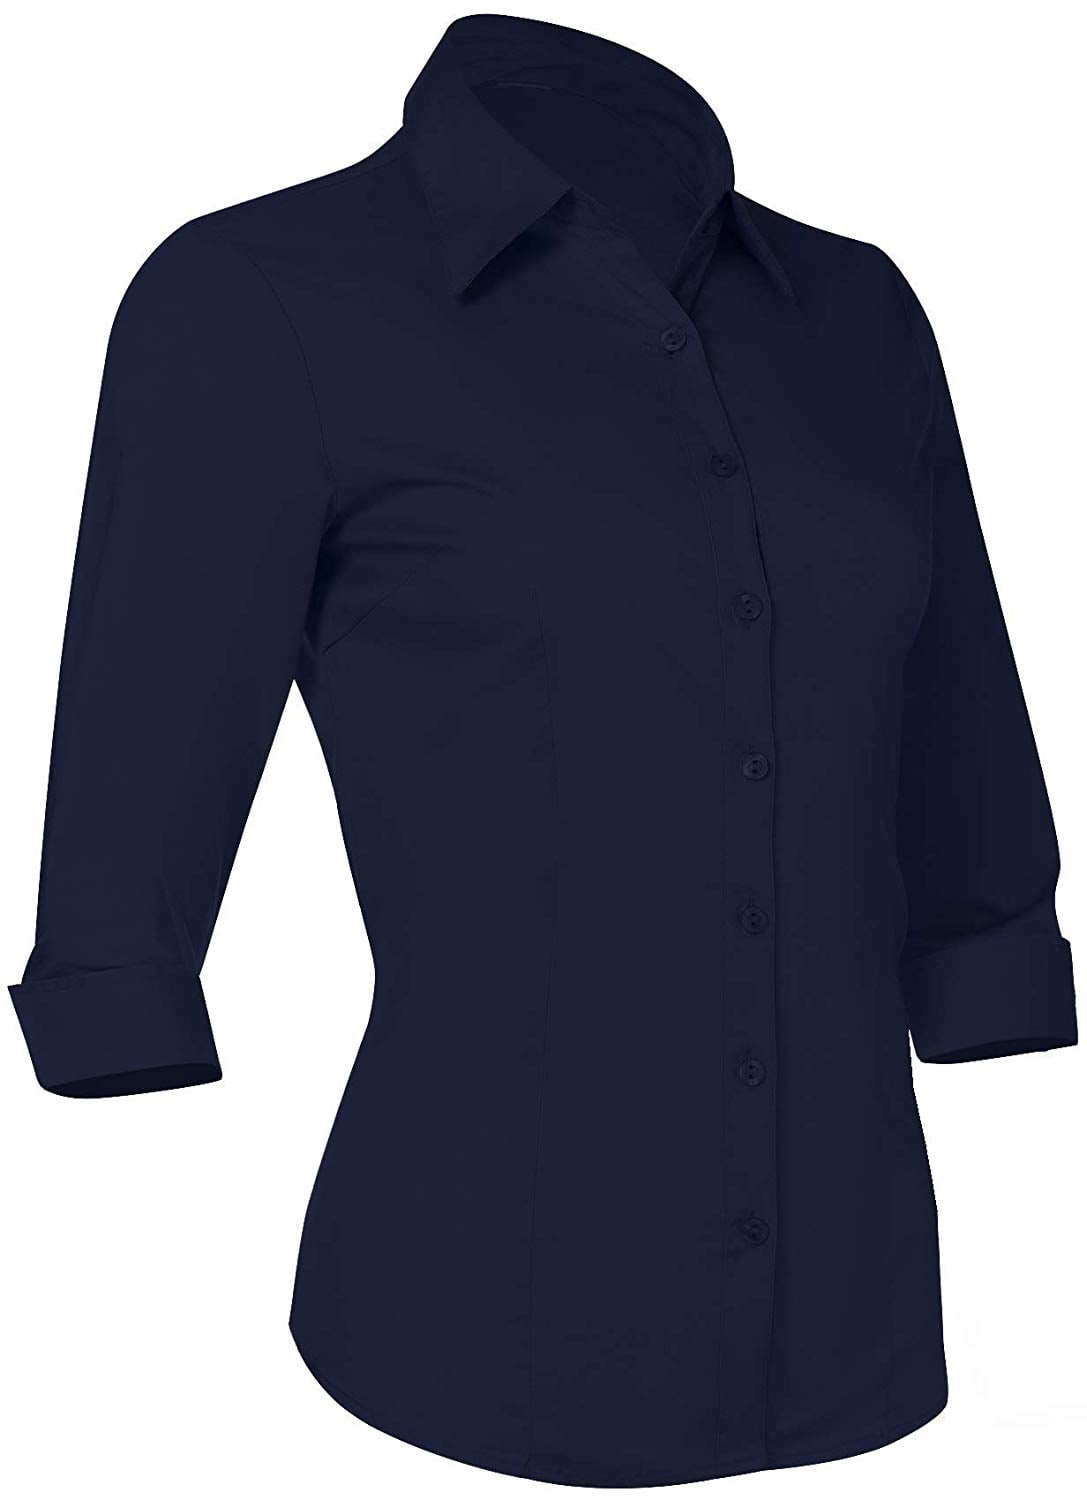 navy blue collared shirt womens